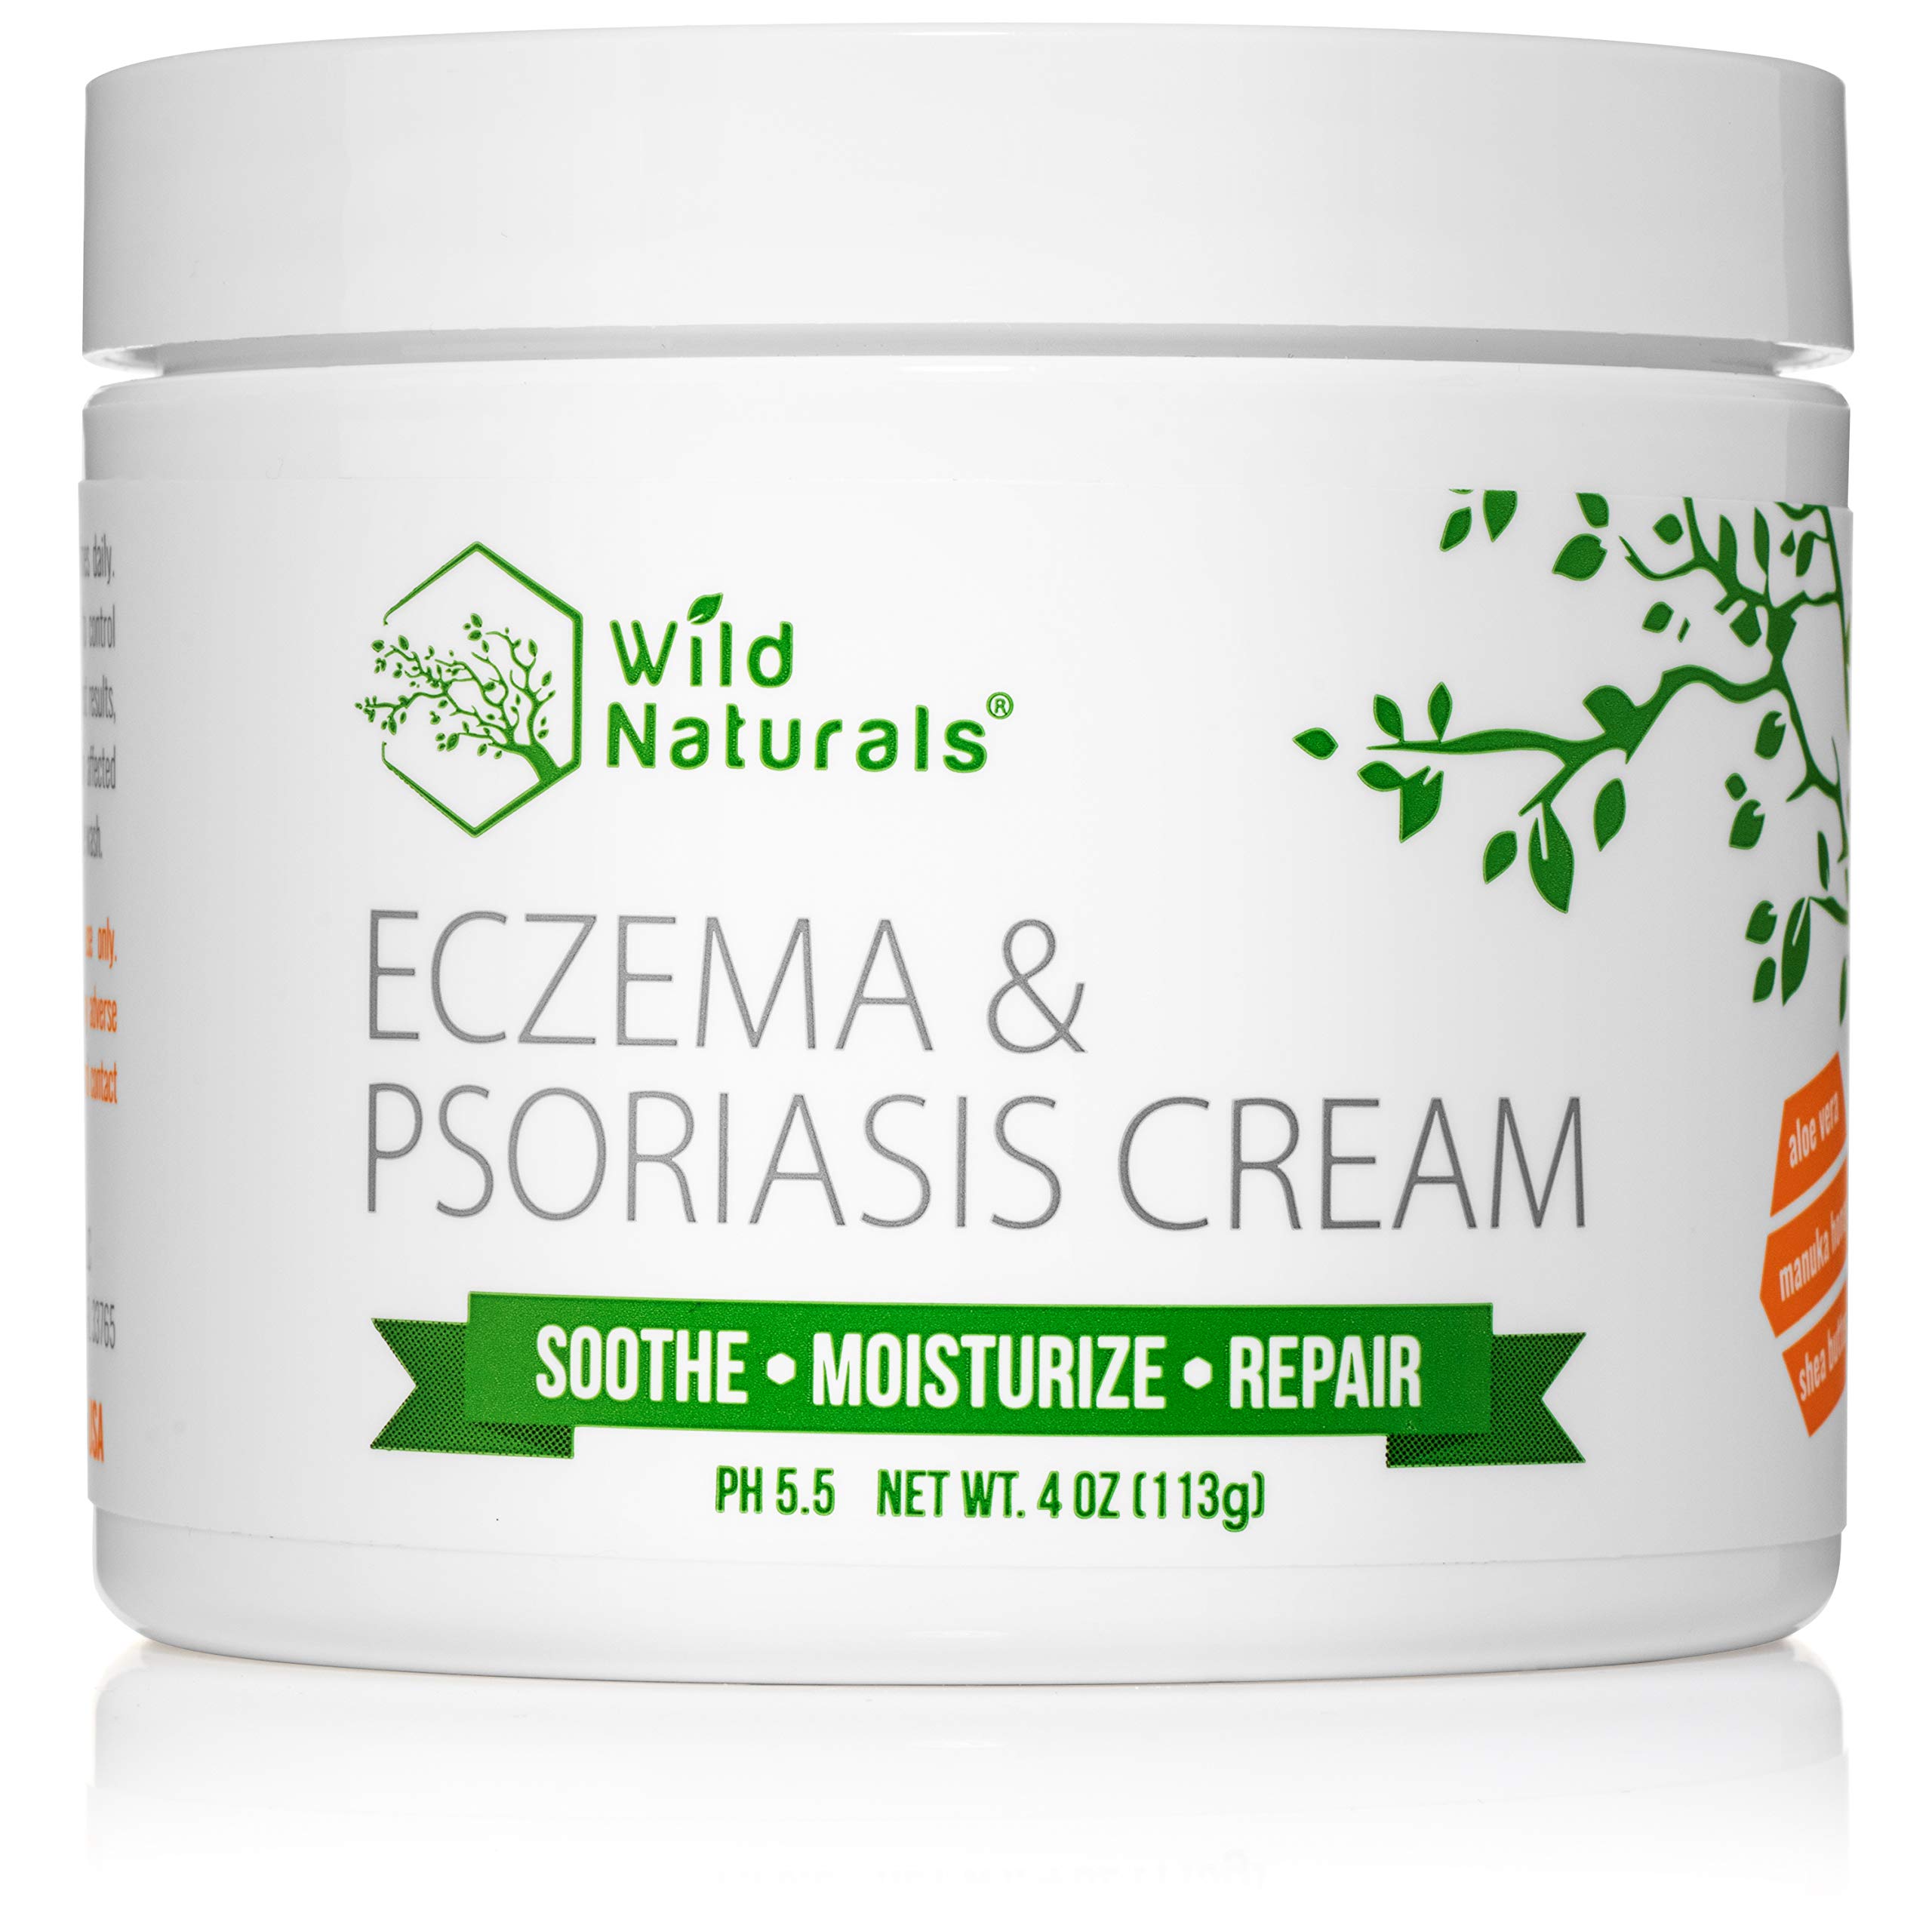 Wild Naturals Eczema Psoriasis Cream